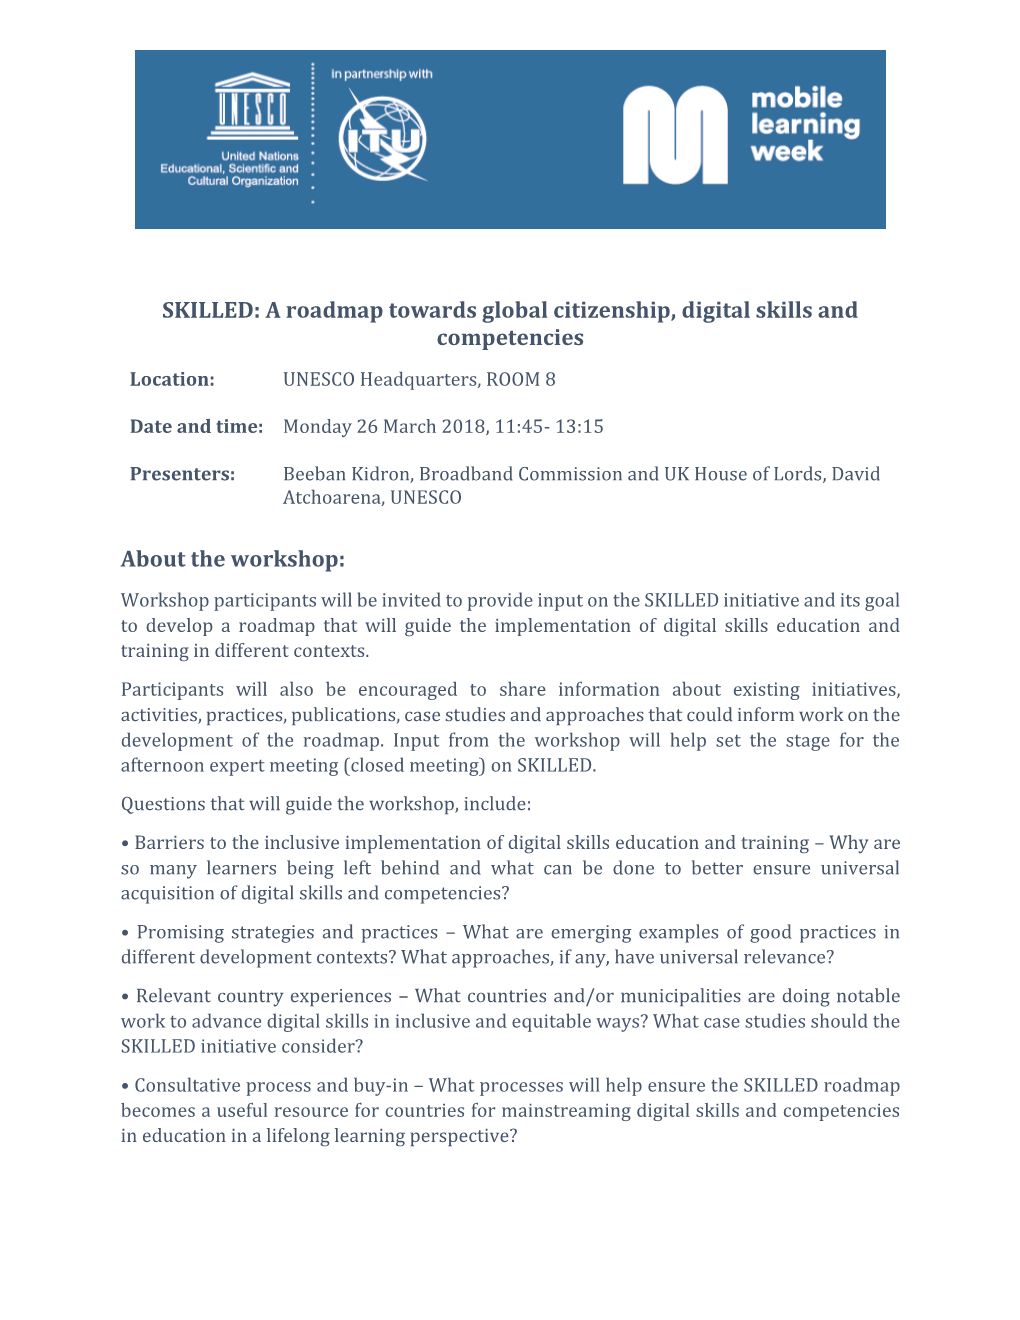 A Roadmap Towards Global Citizenship, Digital Skills and Competencies Location: UNESCO Headquarters, ROOM 8